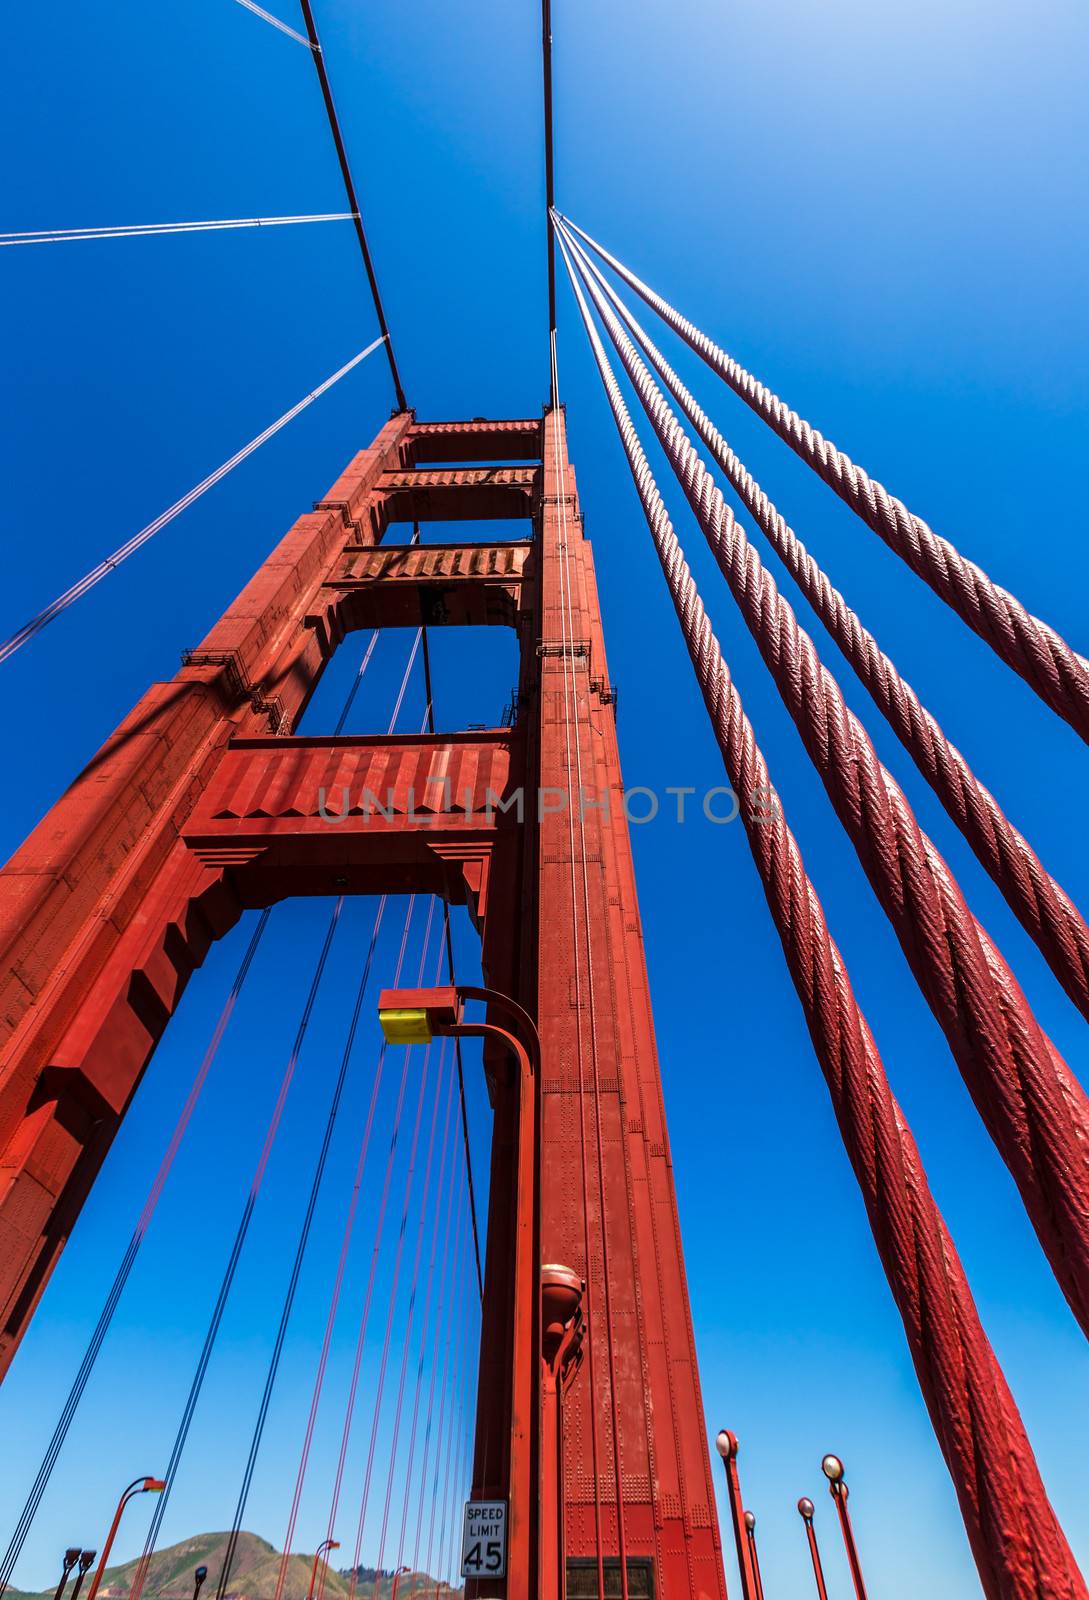 Golden Gate Bridge details in San Francisco California USA